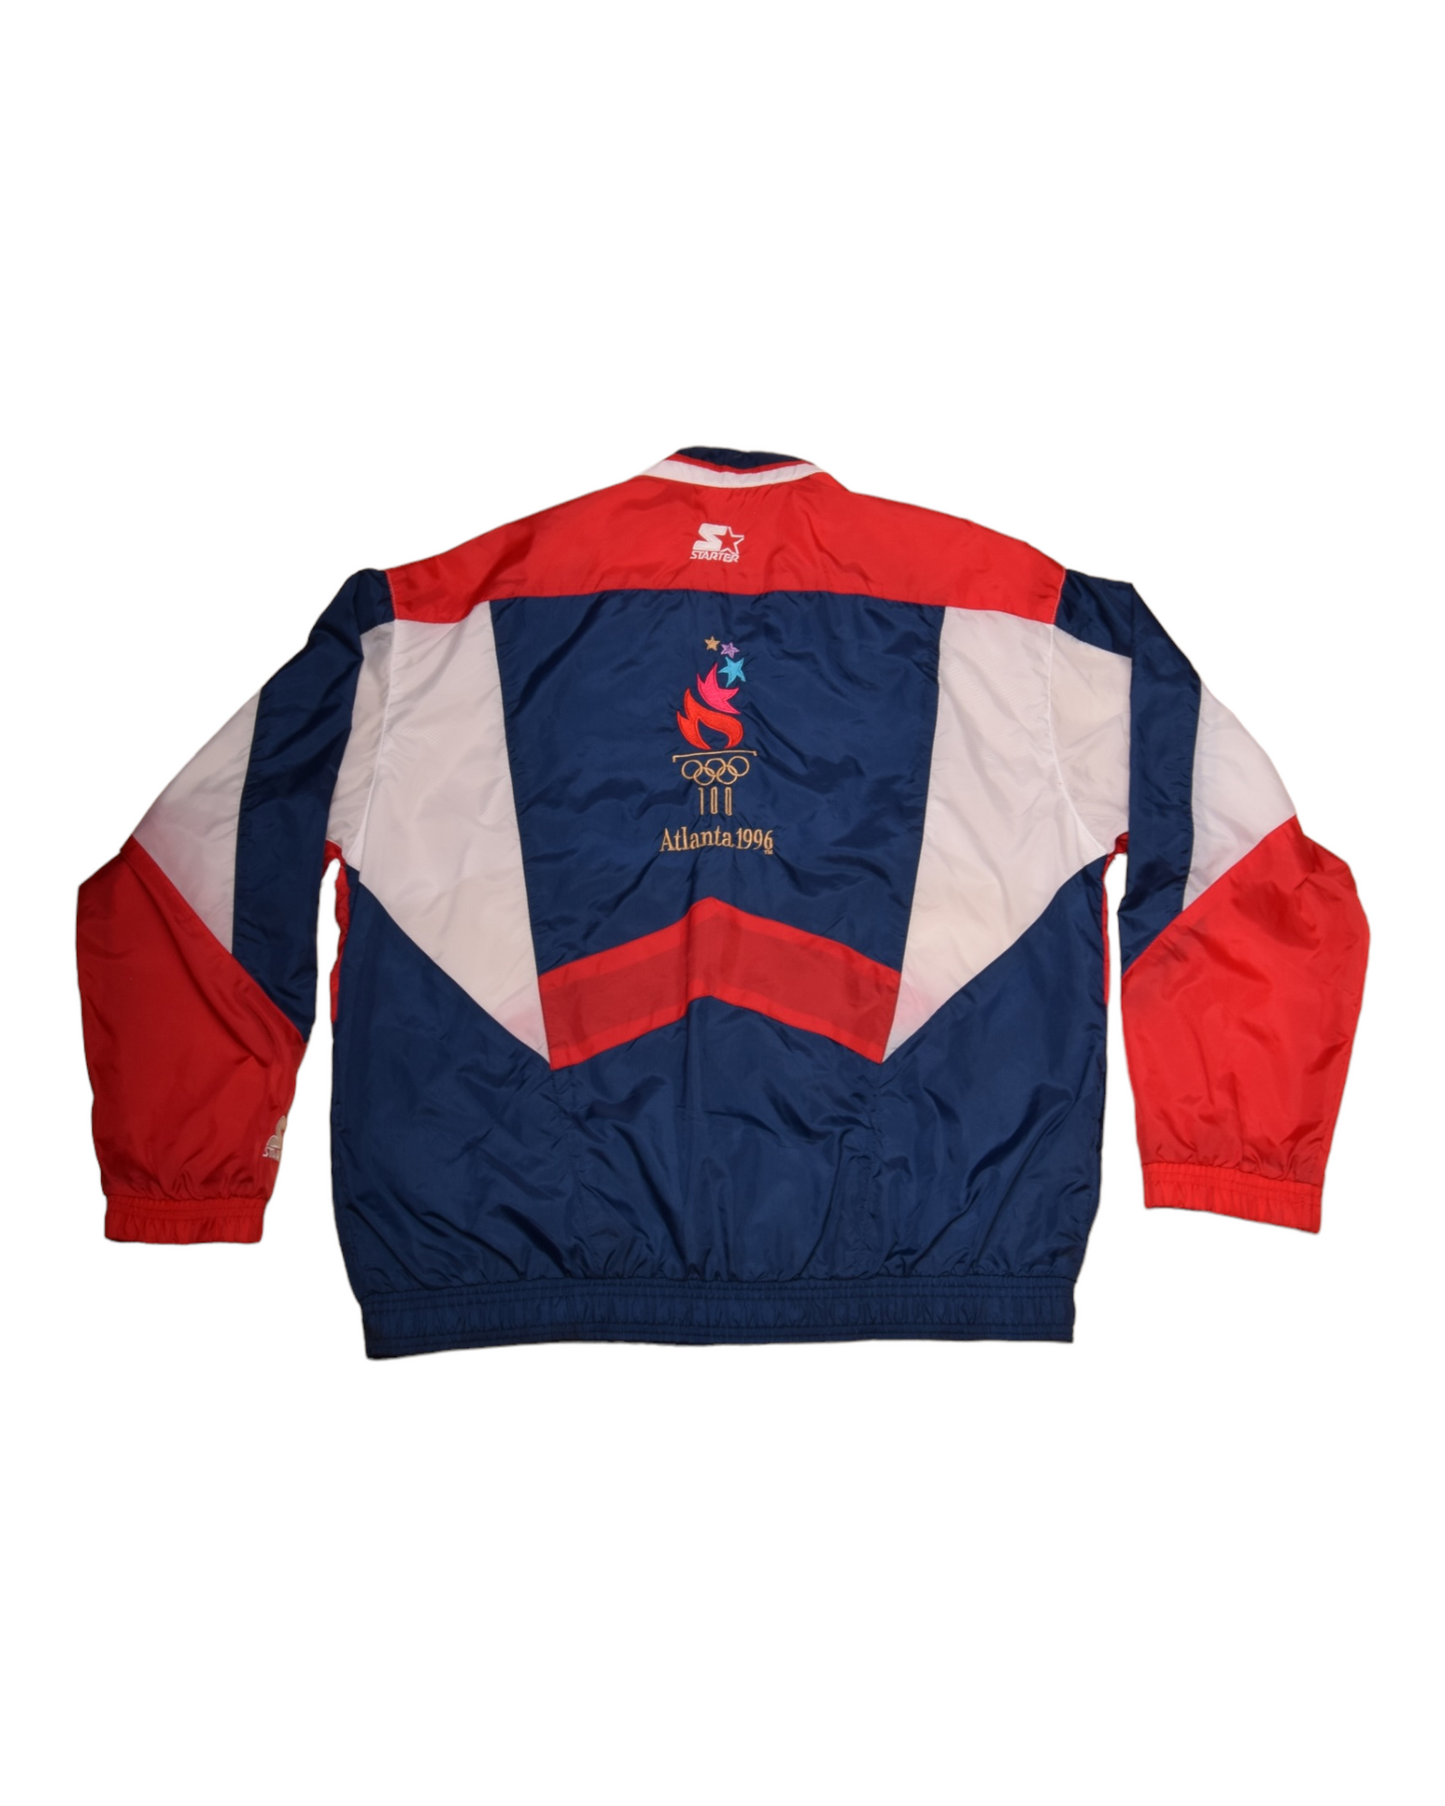 Vintage Starter Atlanta 1996 Olympic Games Jackets / Shell Size M-L USA Flag White